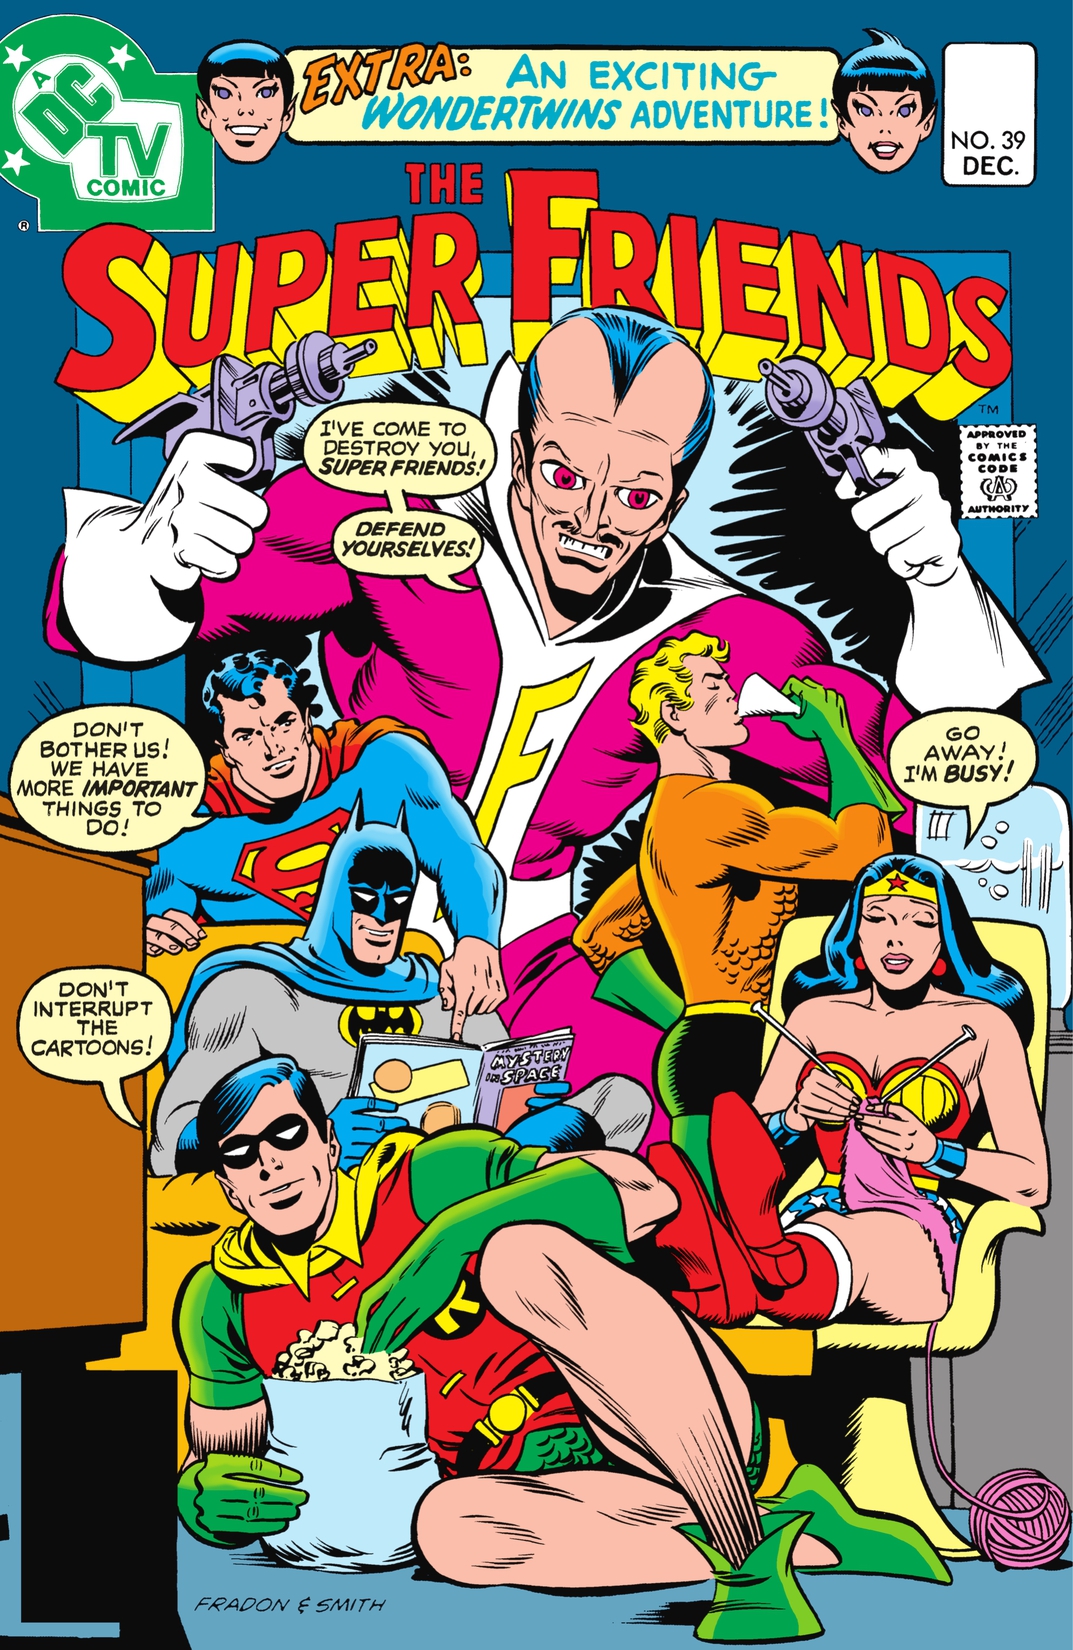 Super Friends (1976-1981) #39 preview images